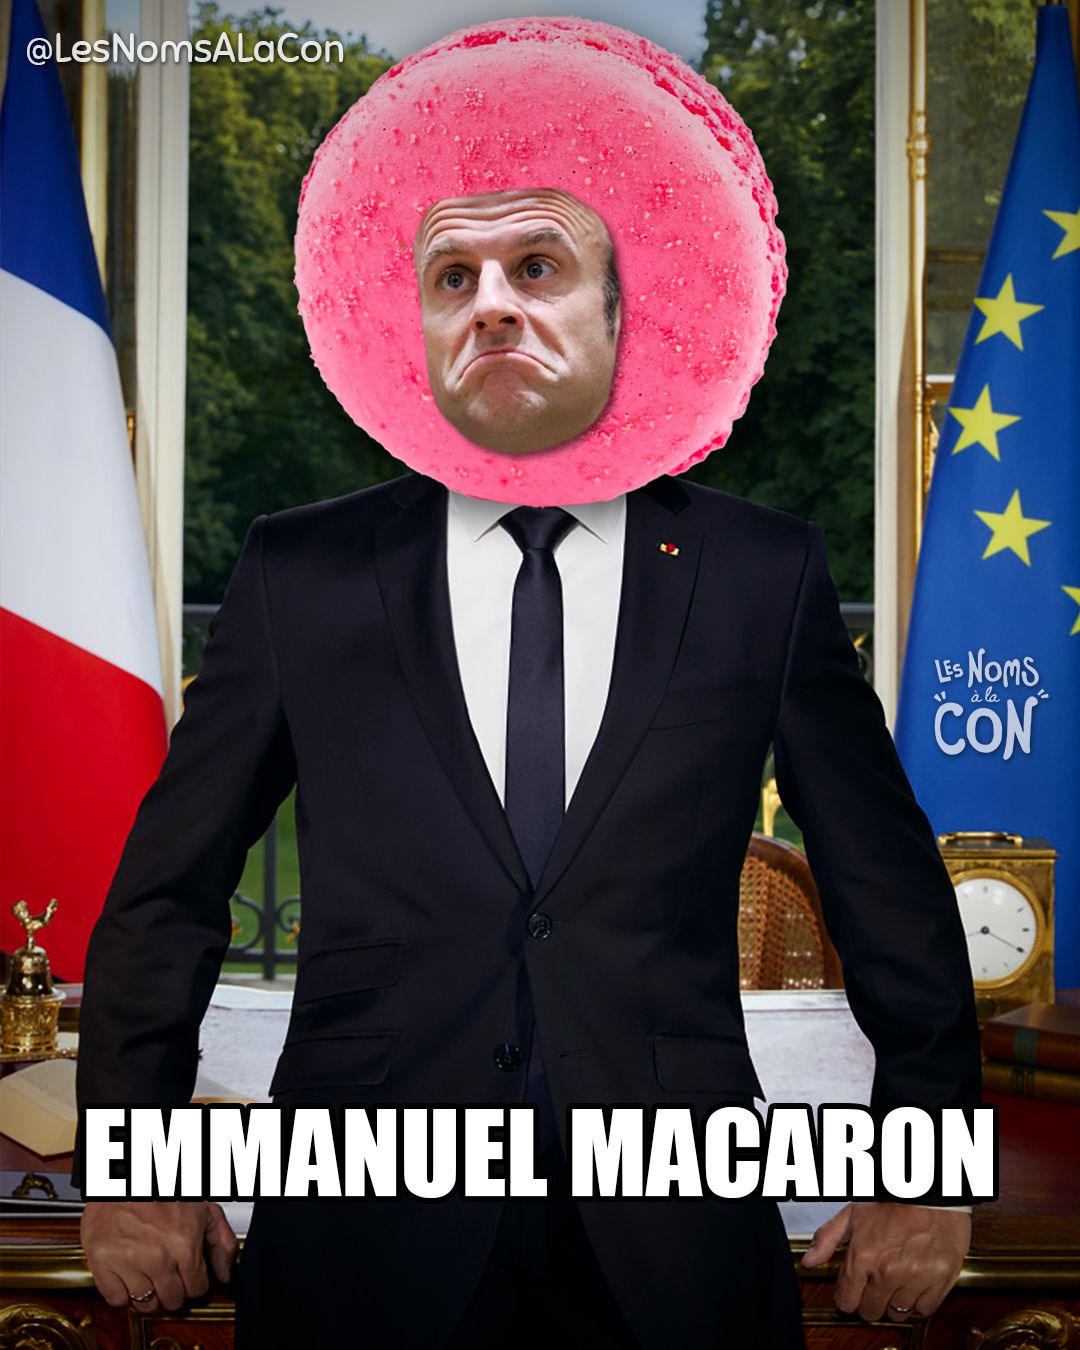 Emmanuel Macaron